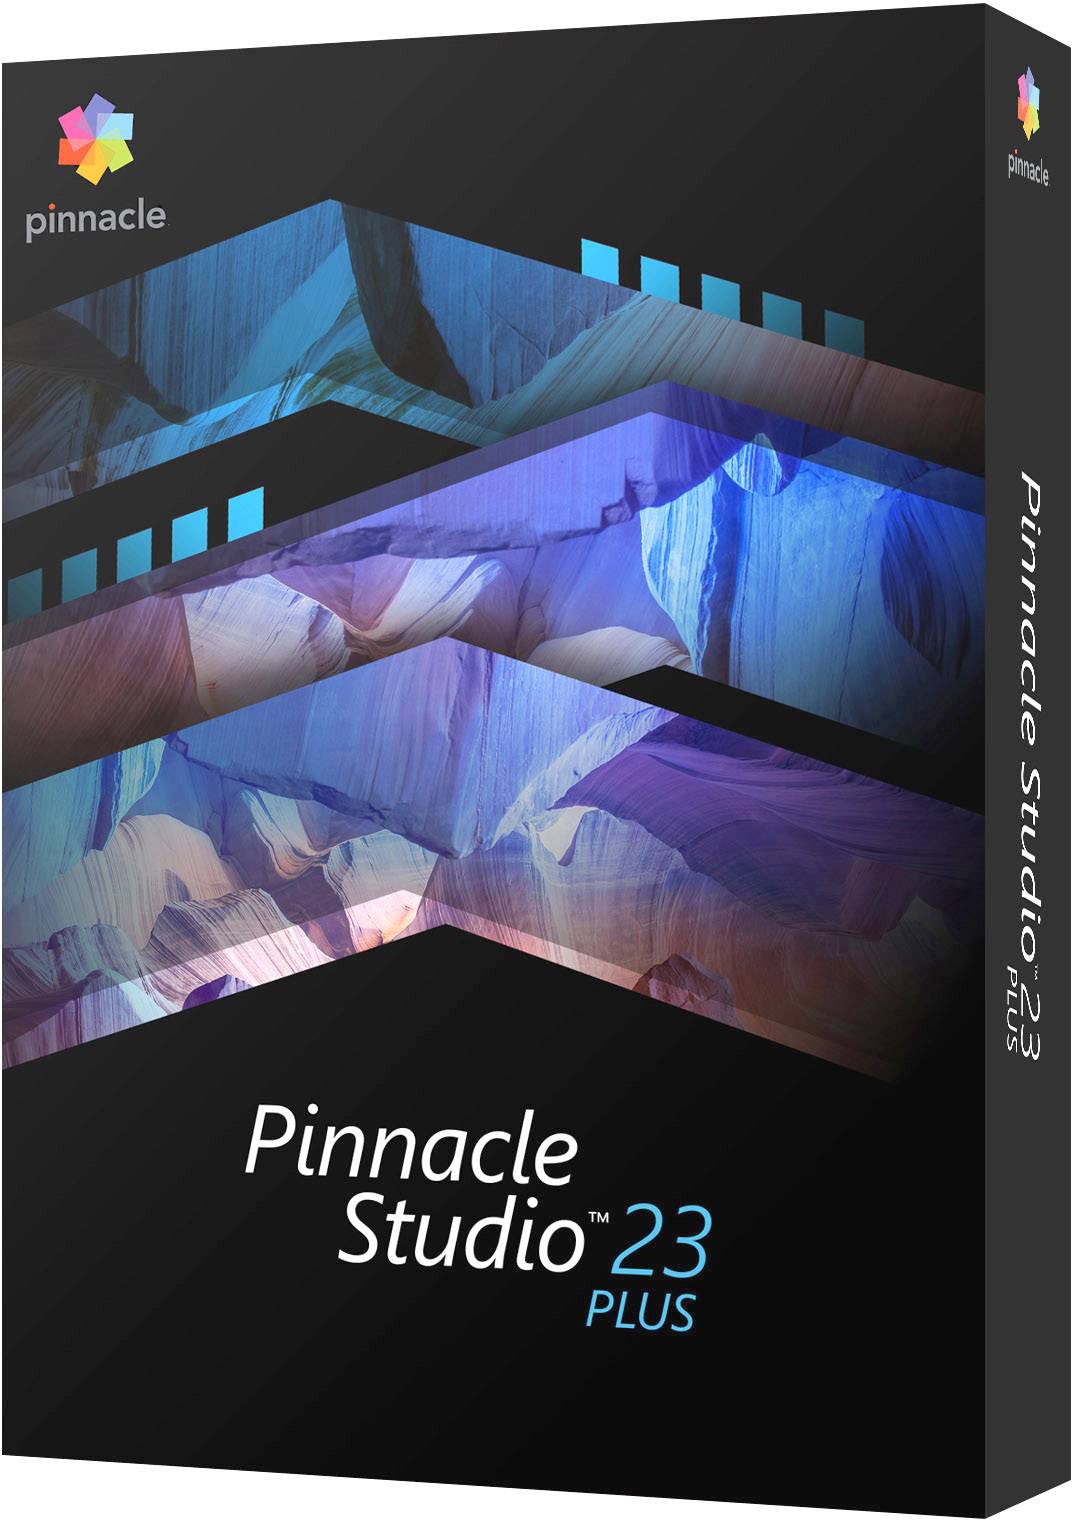 disc burning errors in pinnacle studio 23 ultimate edition